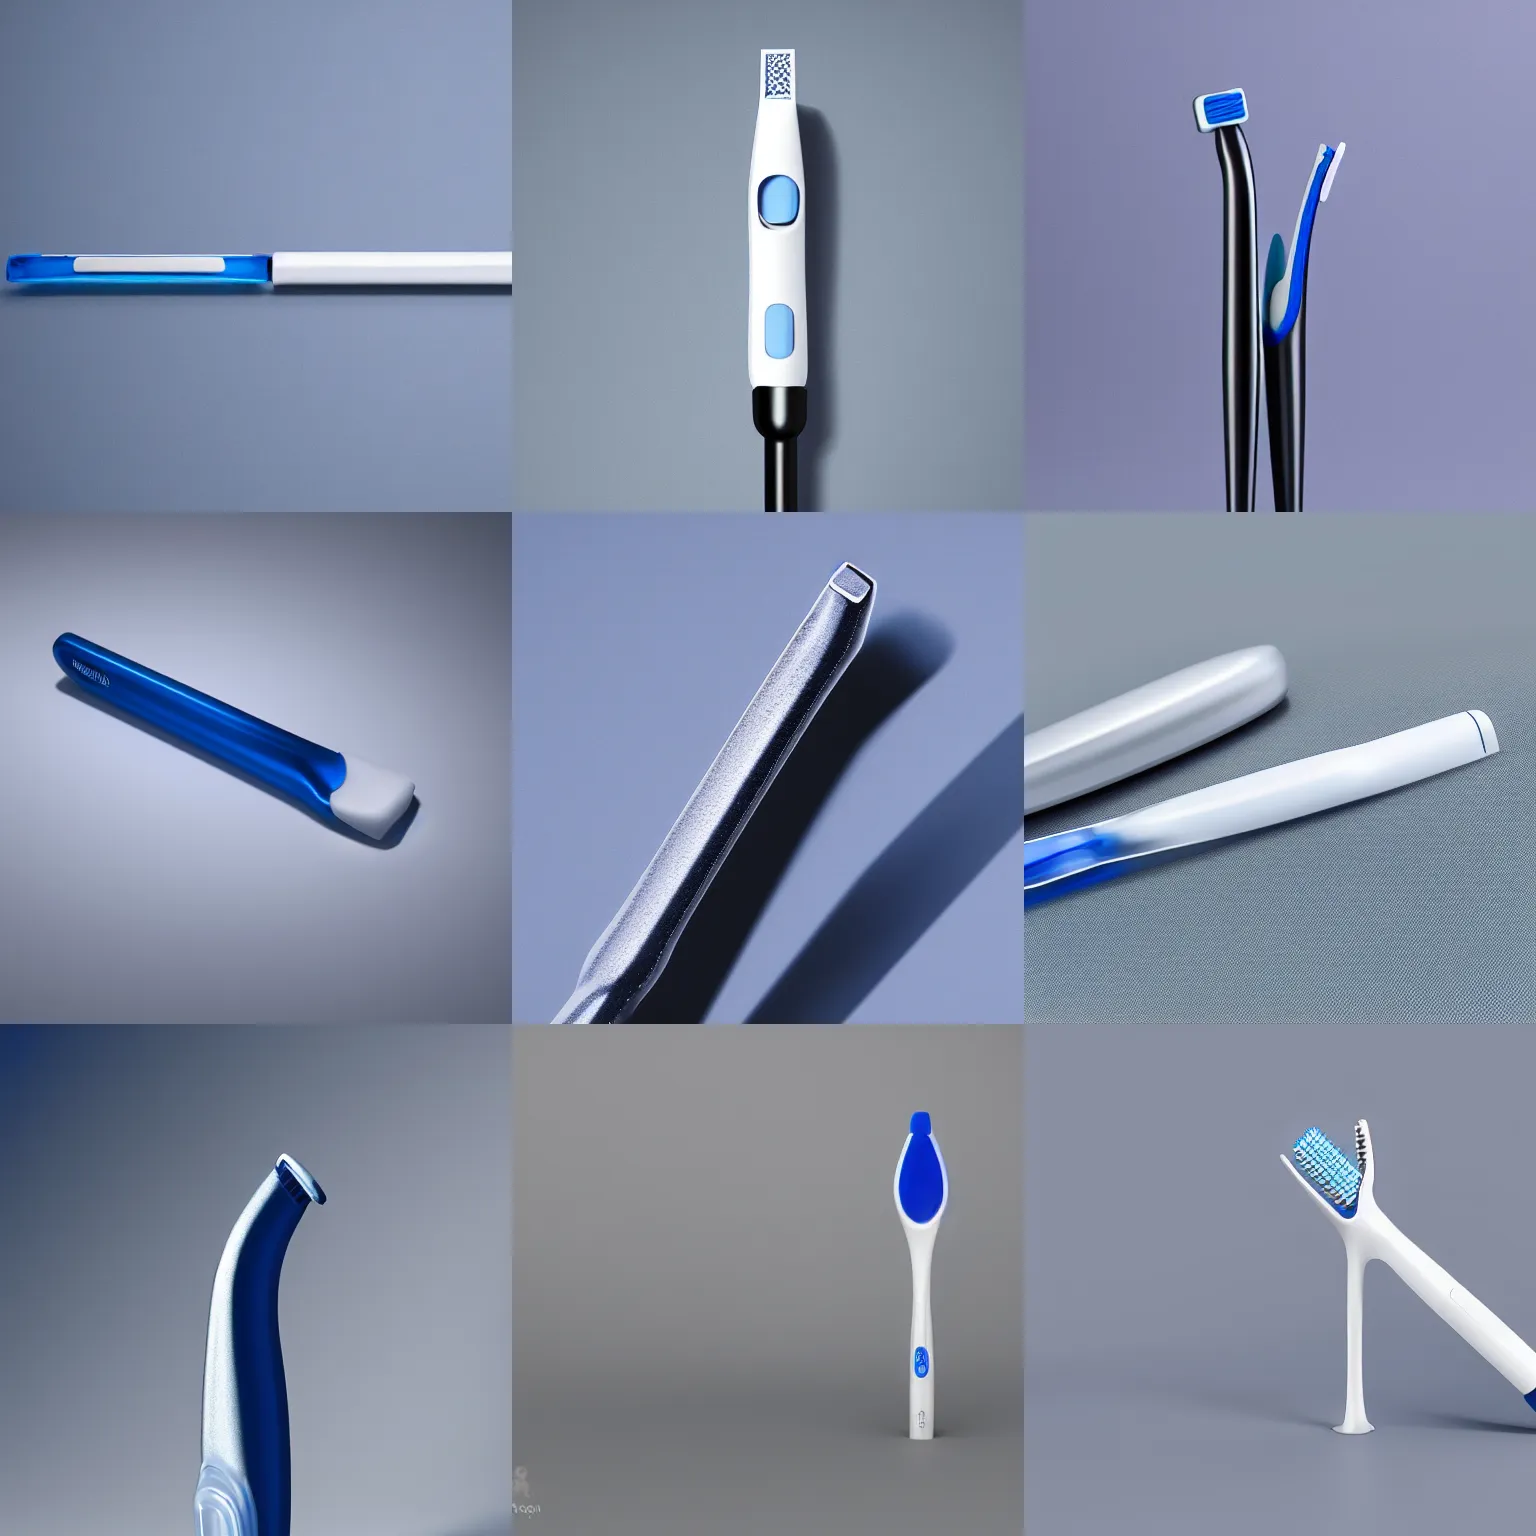 Prompt: ( oral - b toothbrush ) designed by apple, studio photo, white backdrop, studio light, solid works, octane render, macro shot, in focus, dept of field, silver, blue, black design